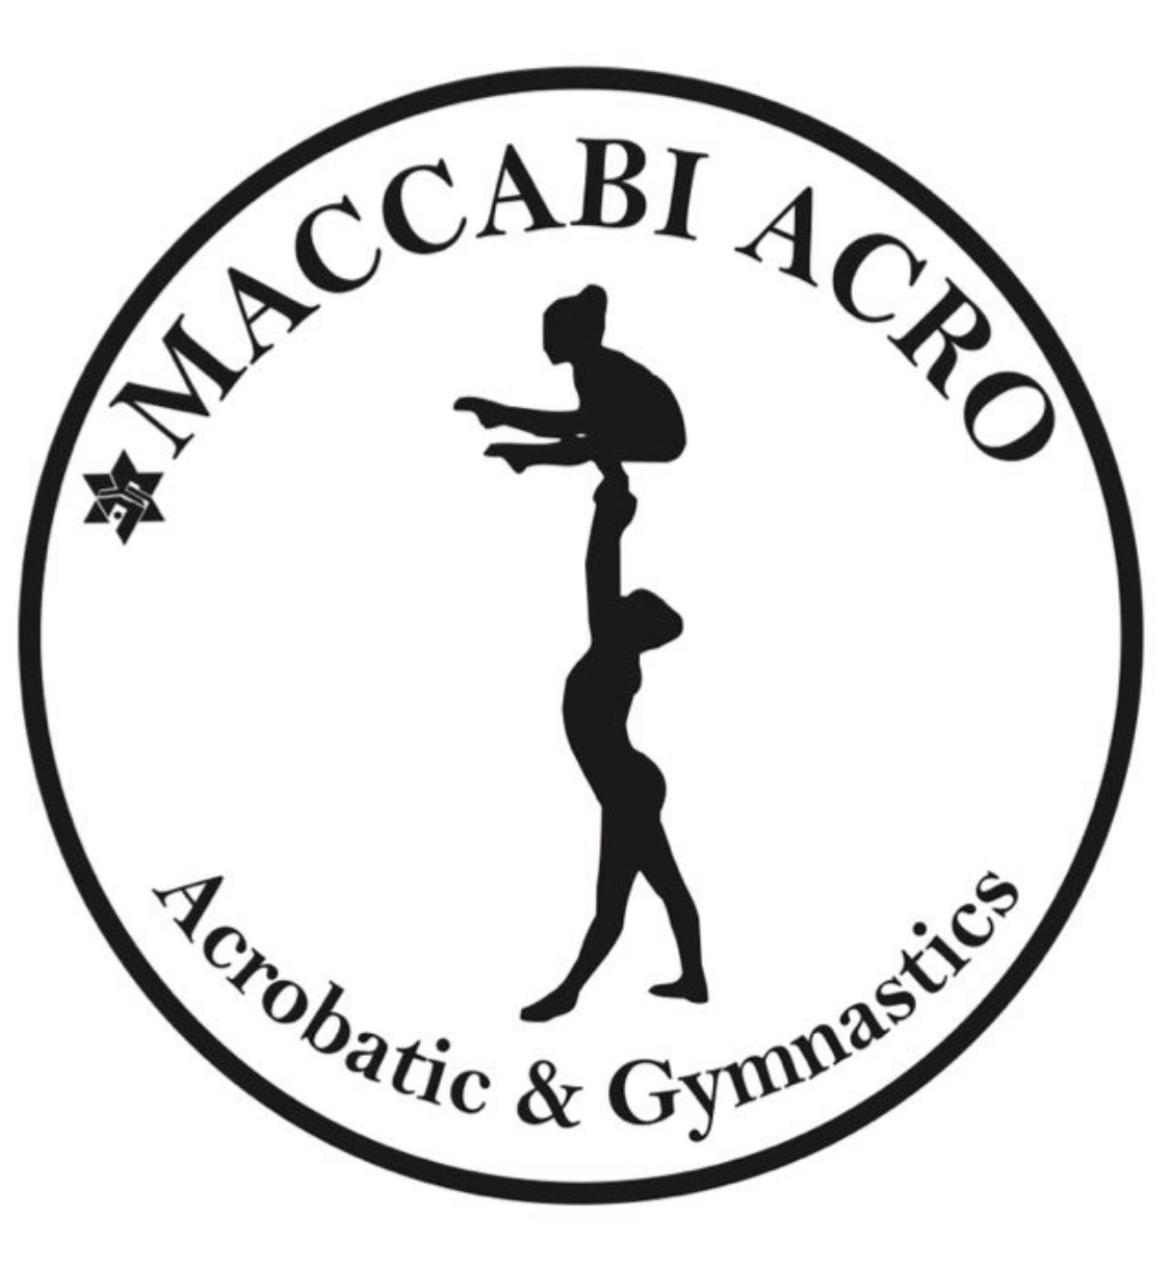 MACCABI ACRO'S SET